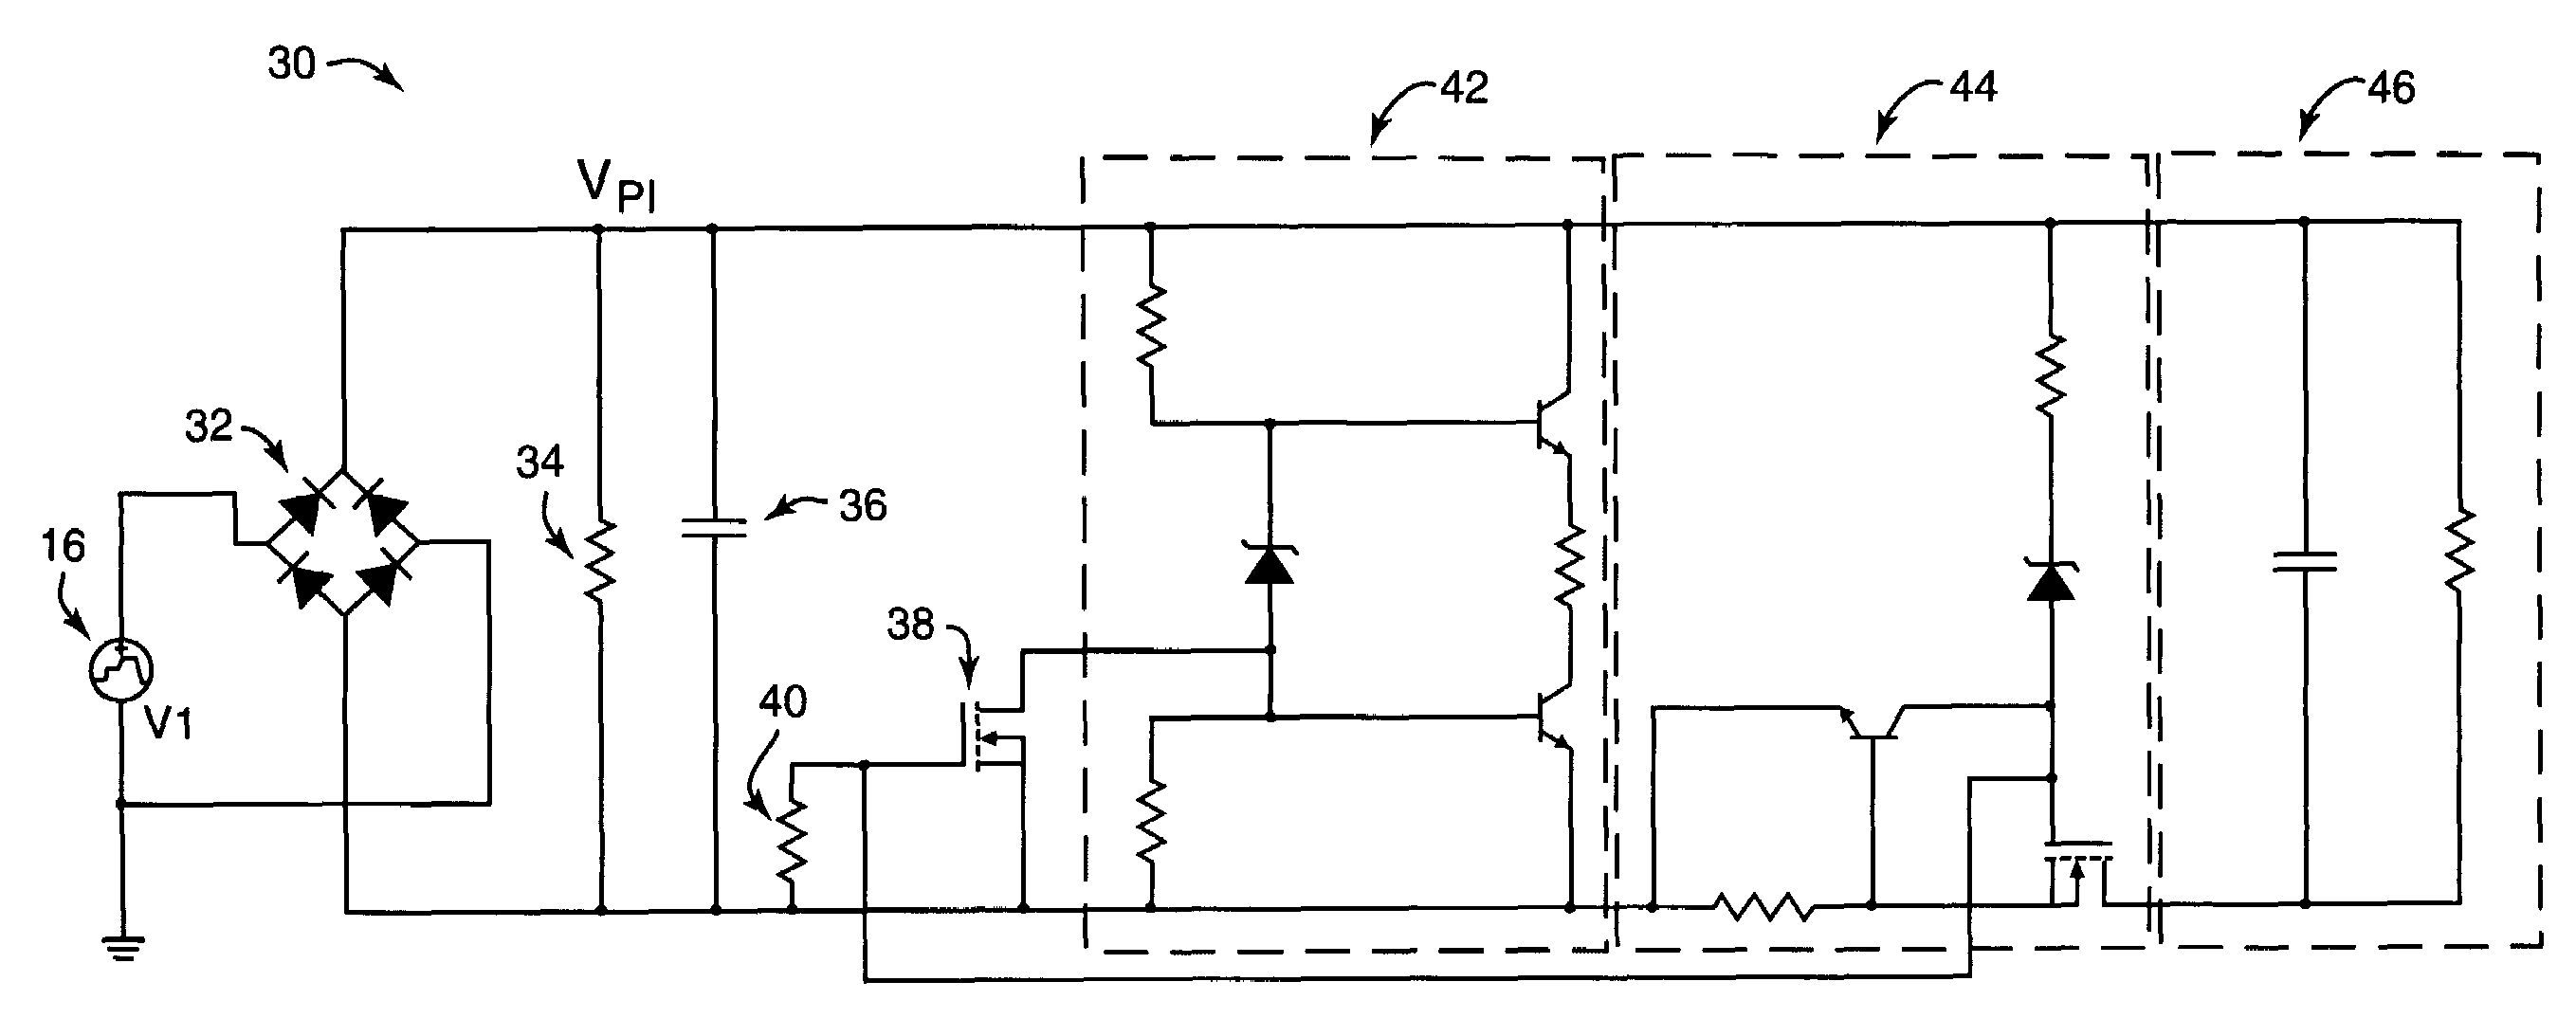 Voltage-activated, constant current sink circuit